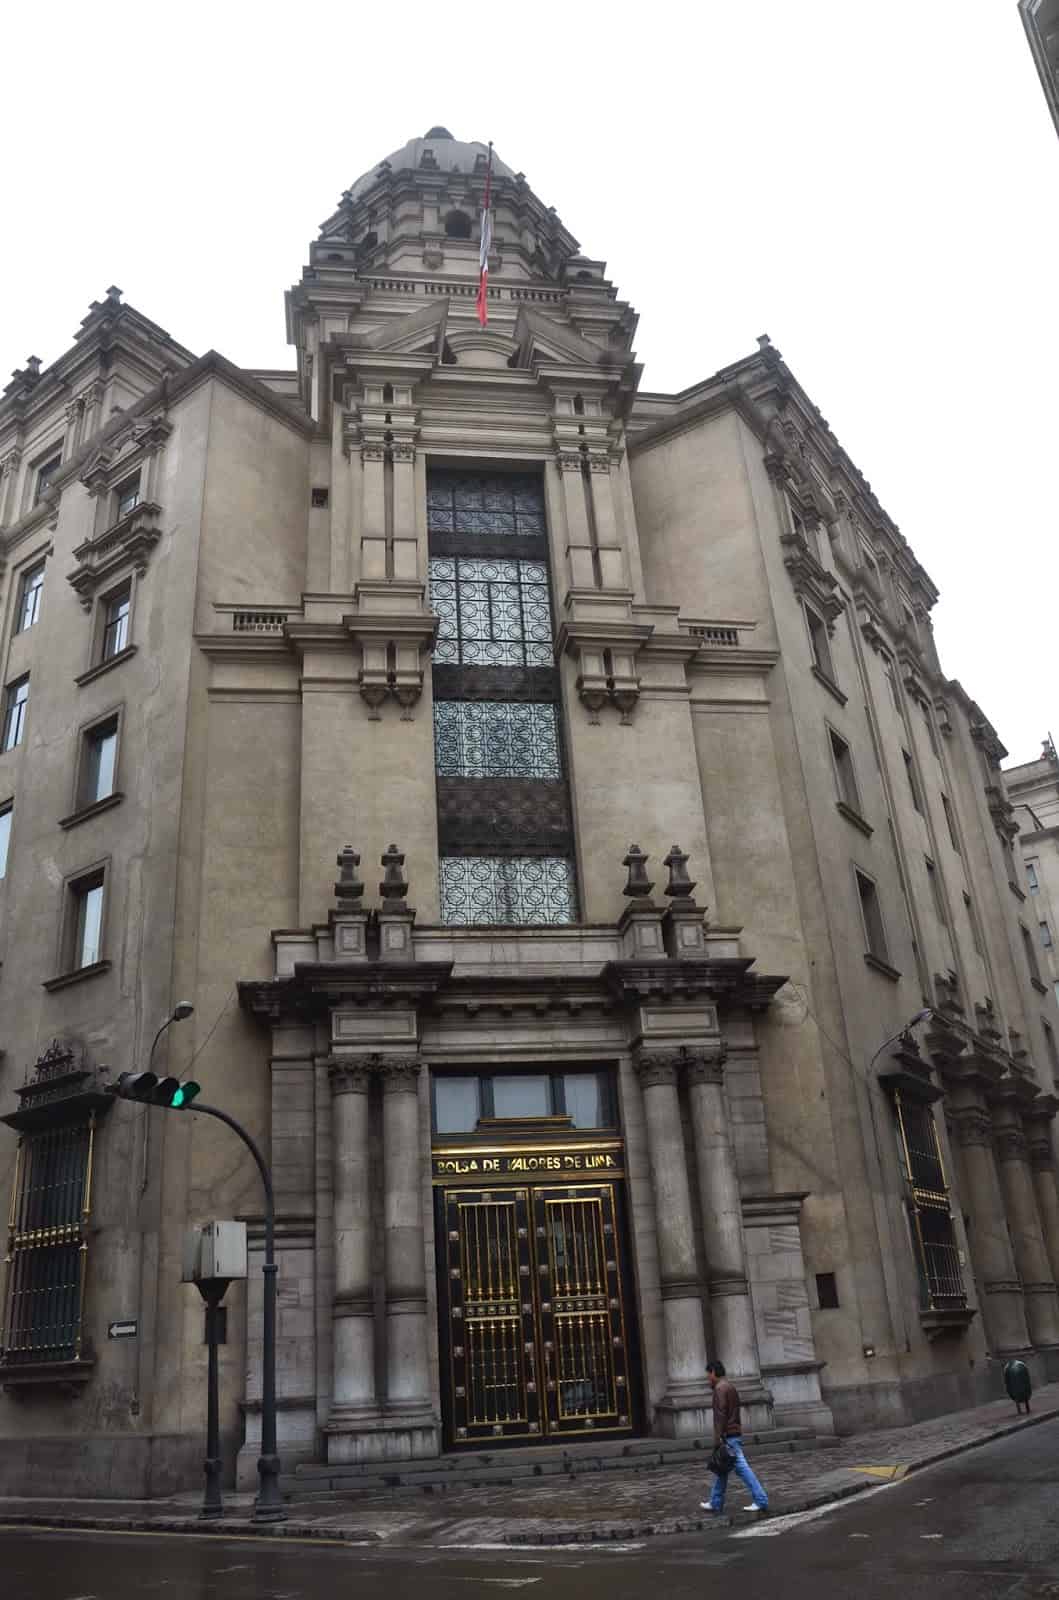 Lima Stock Exchange (Bolsa de Valores) in Lima, Peru